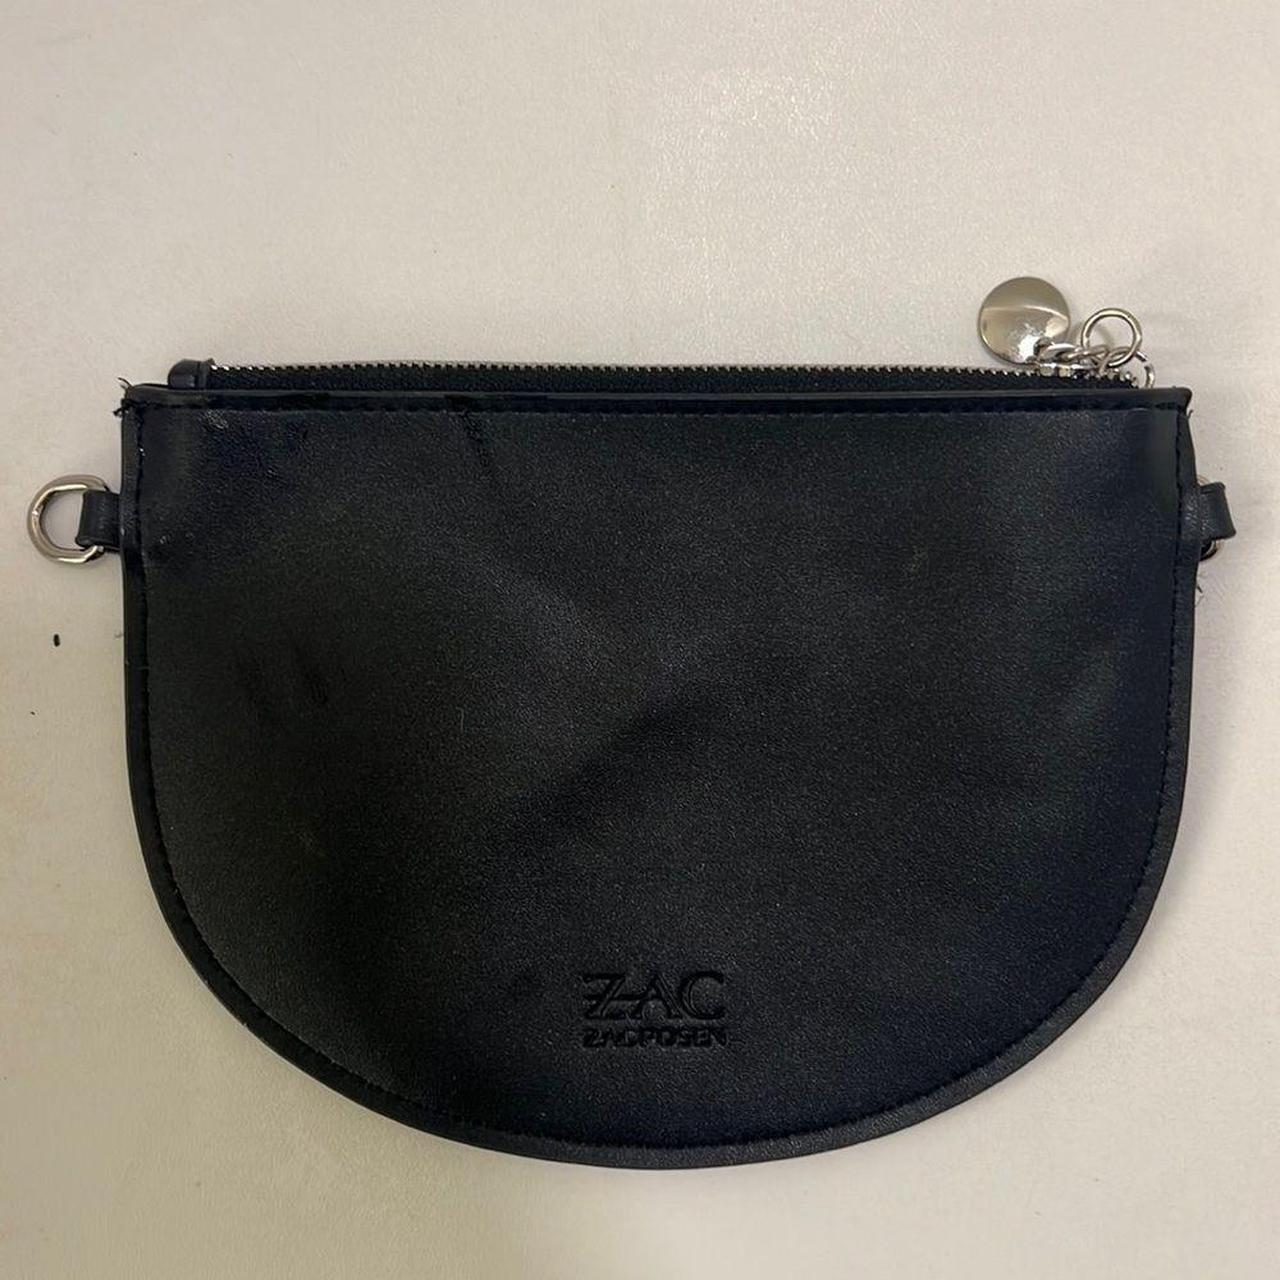 Zac Posen Women's Black Bag